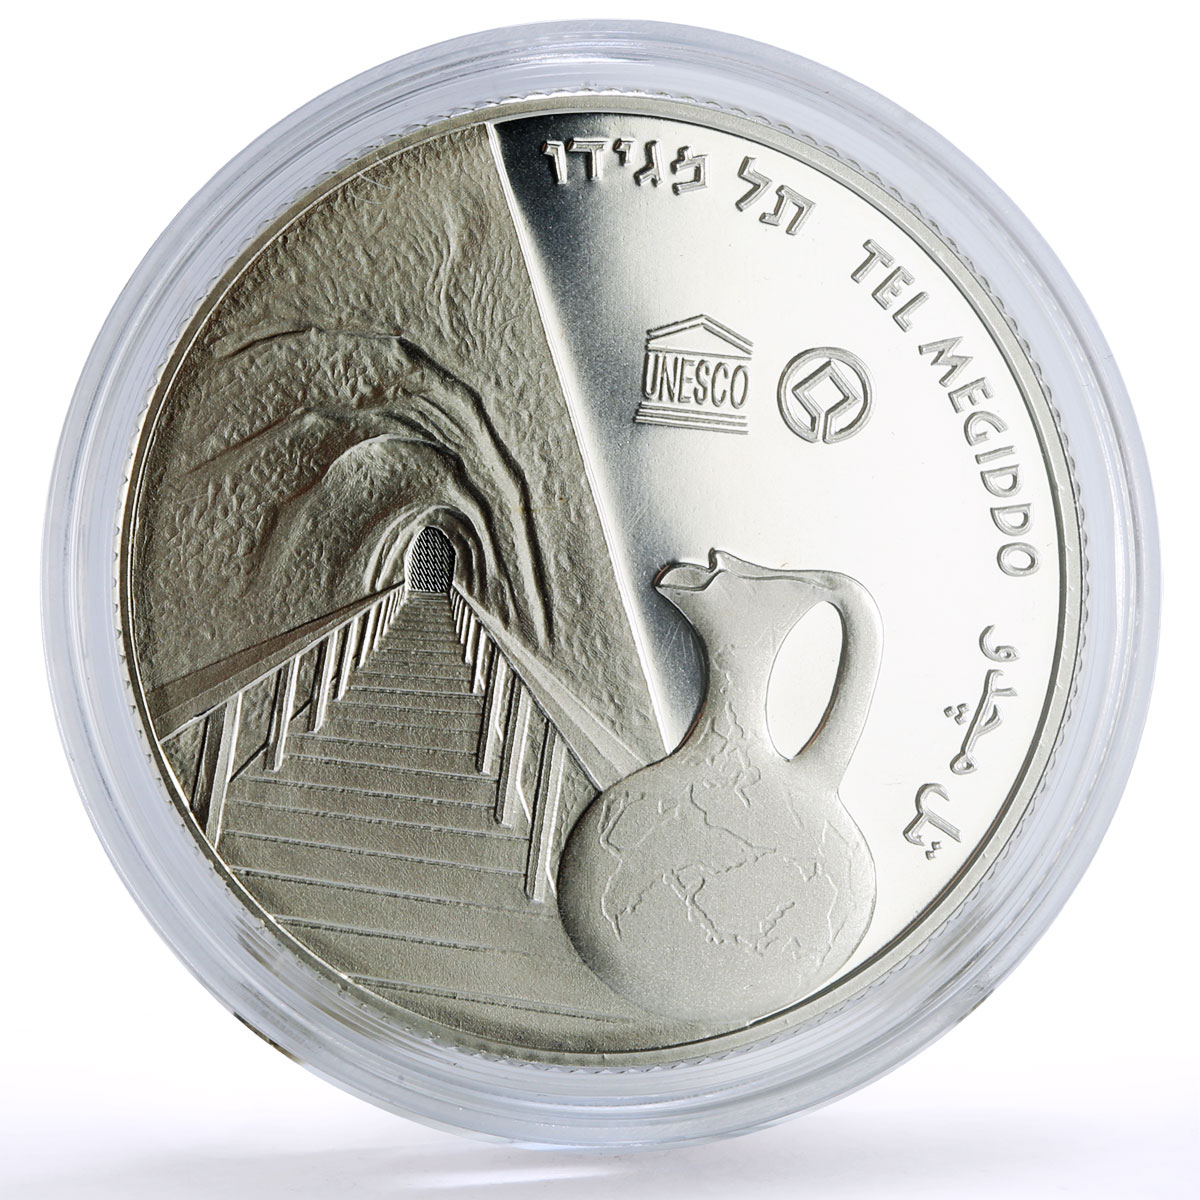 Israel 2 sheqalim UNESCO Heritage Sites Tel Meggido proof silver coin 2012